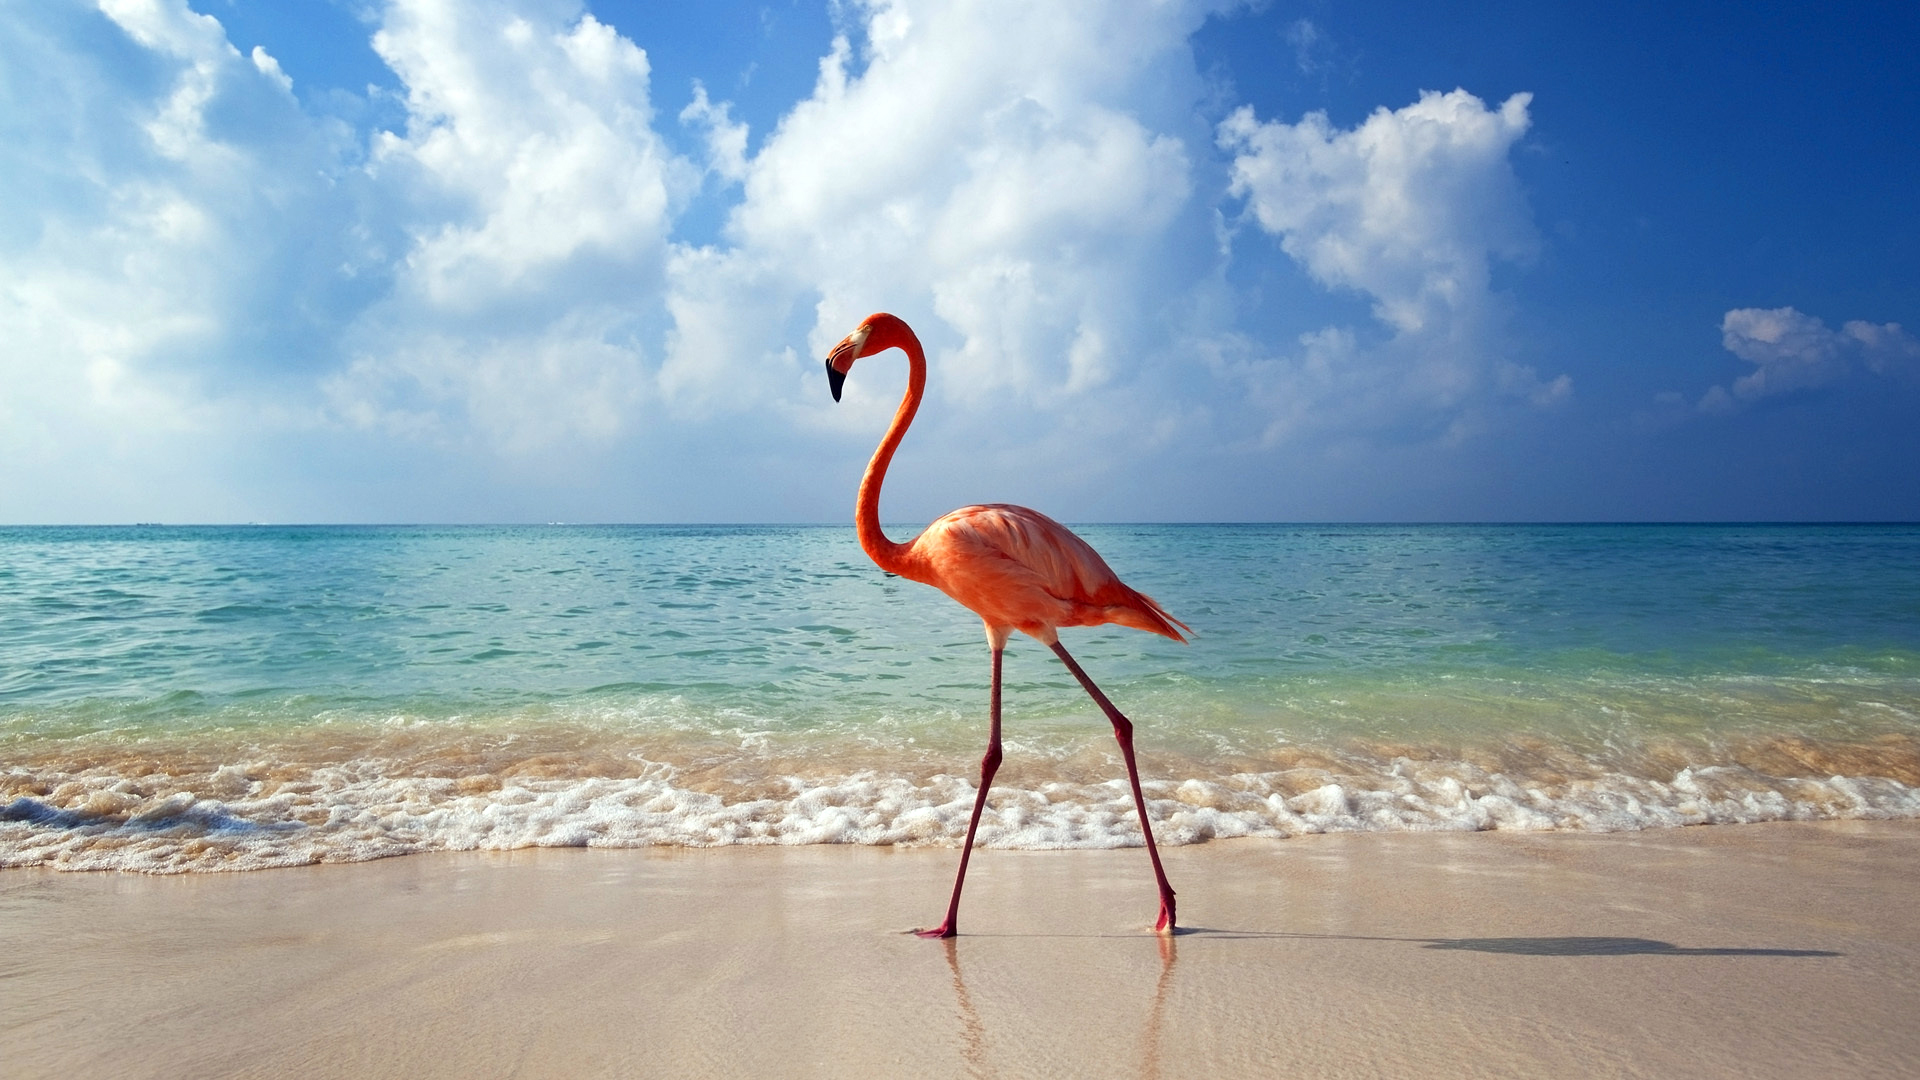 Wallpapers sea beach flamingos on the desktop